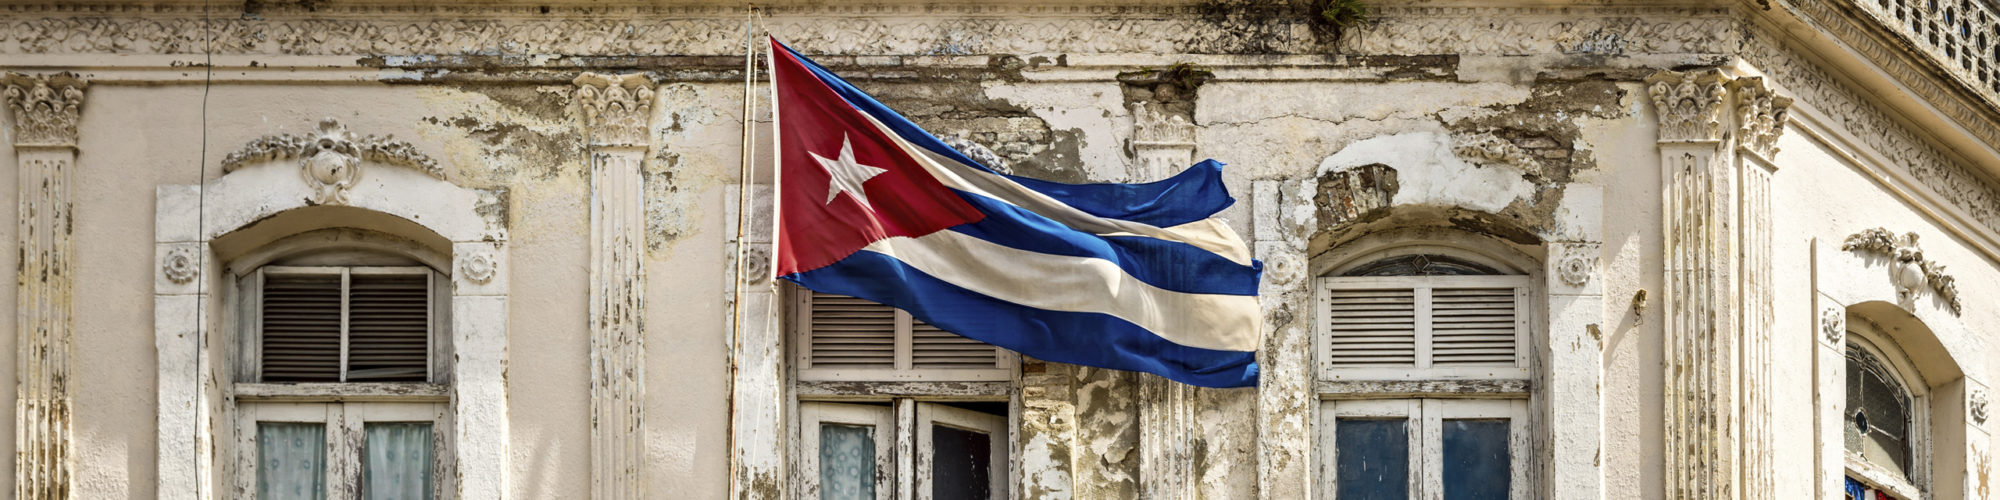 Cuba travel agents packages deals